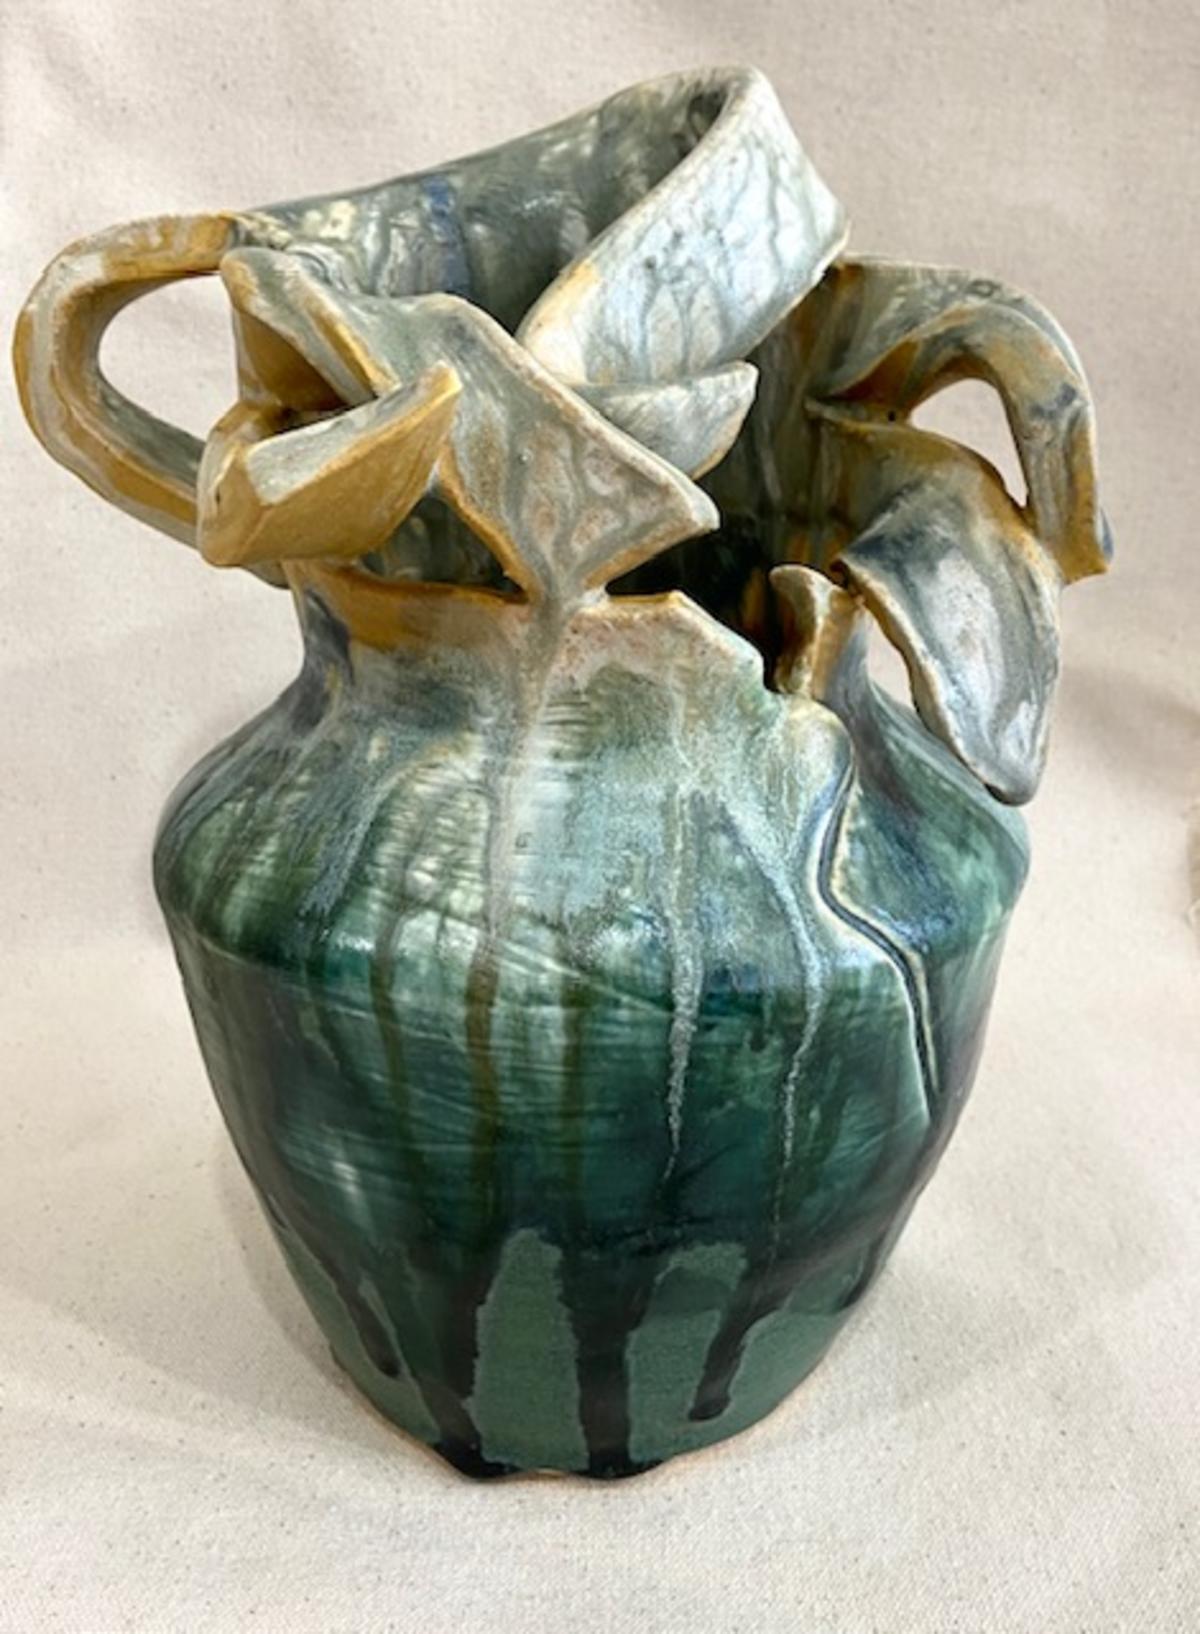 Ceramic vase by Gena Mavuli